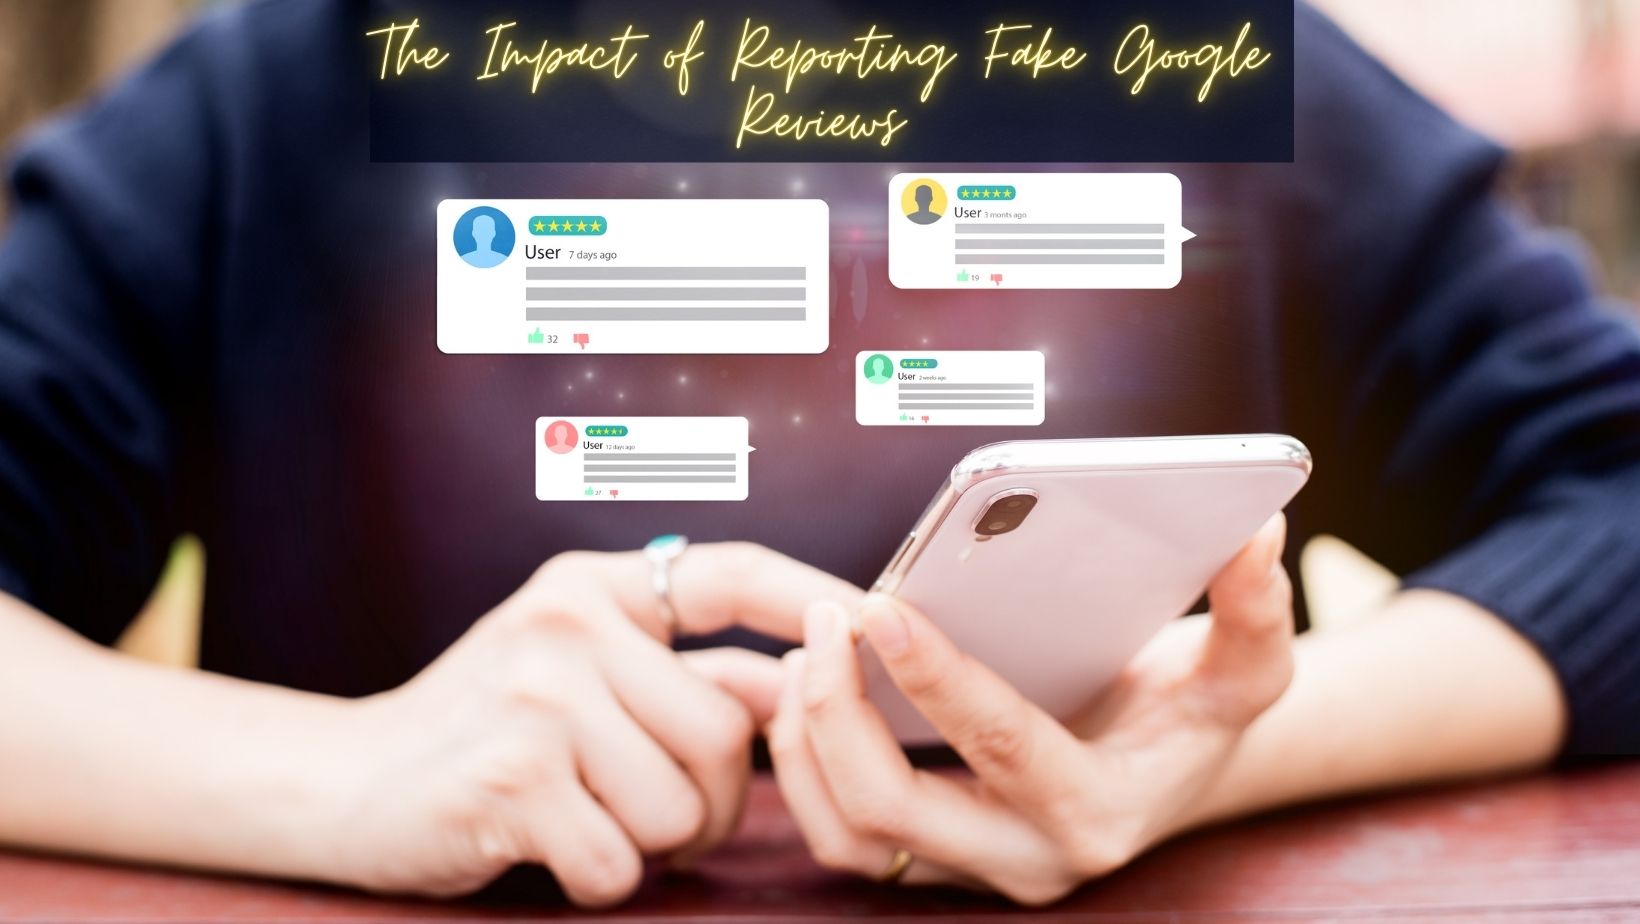 The Impact of Reporting Fake Google Reviews